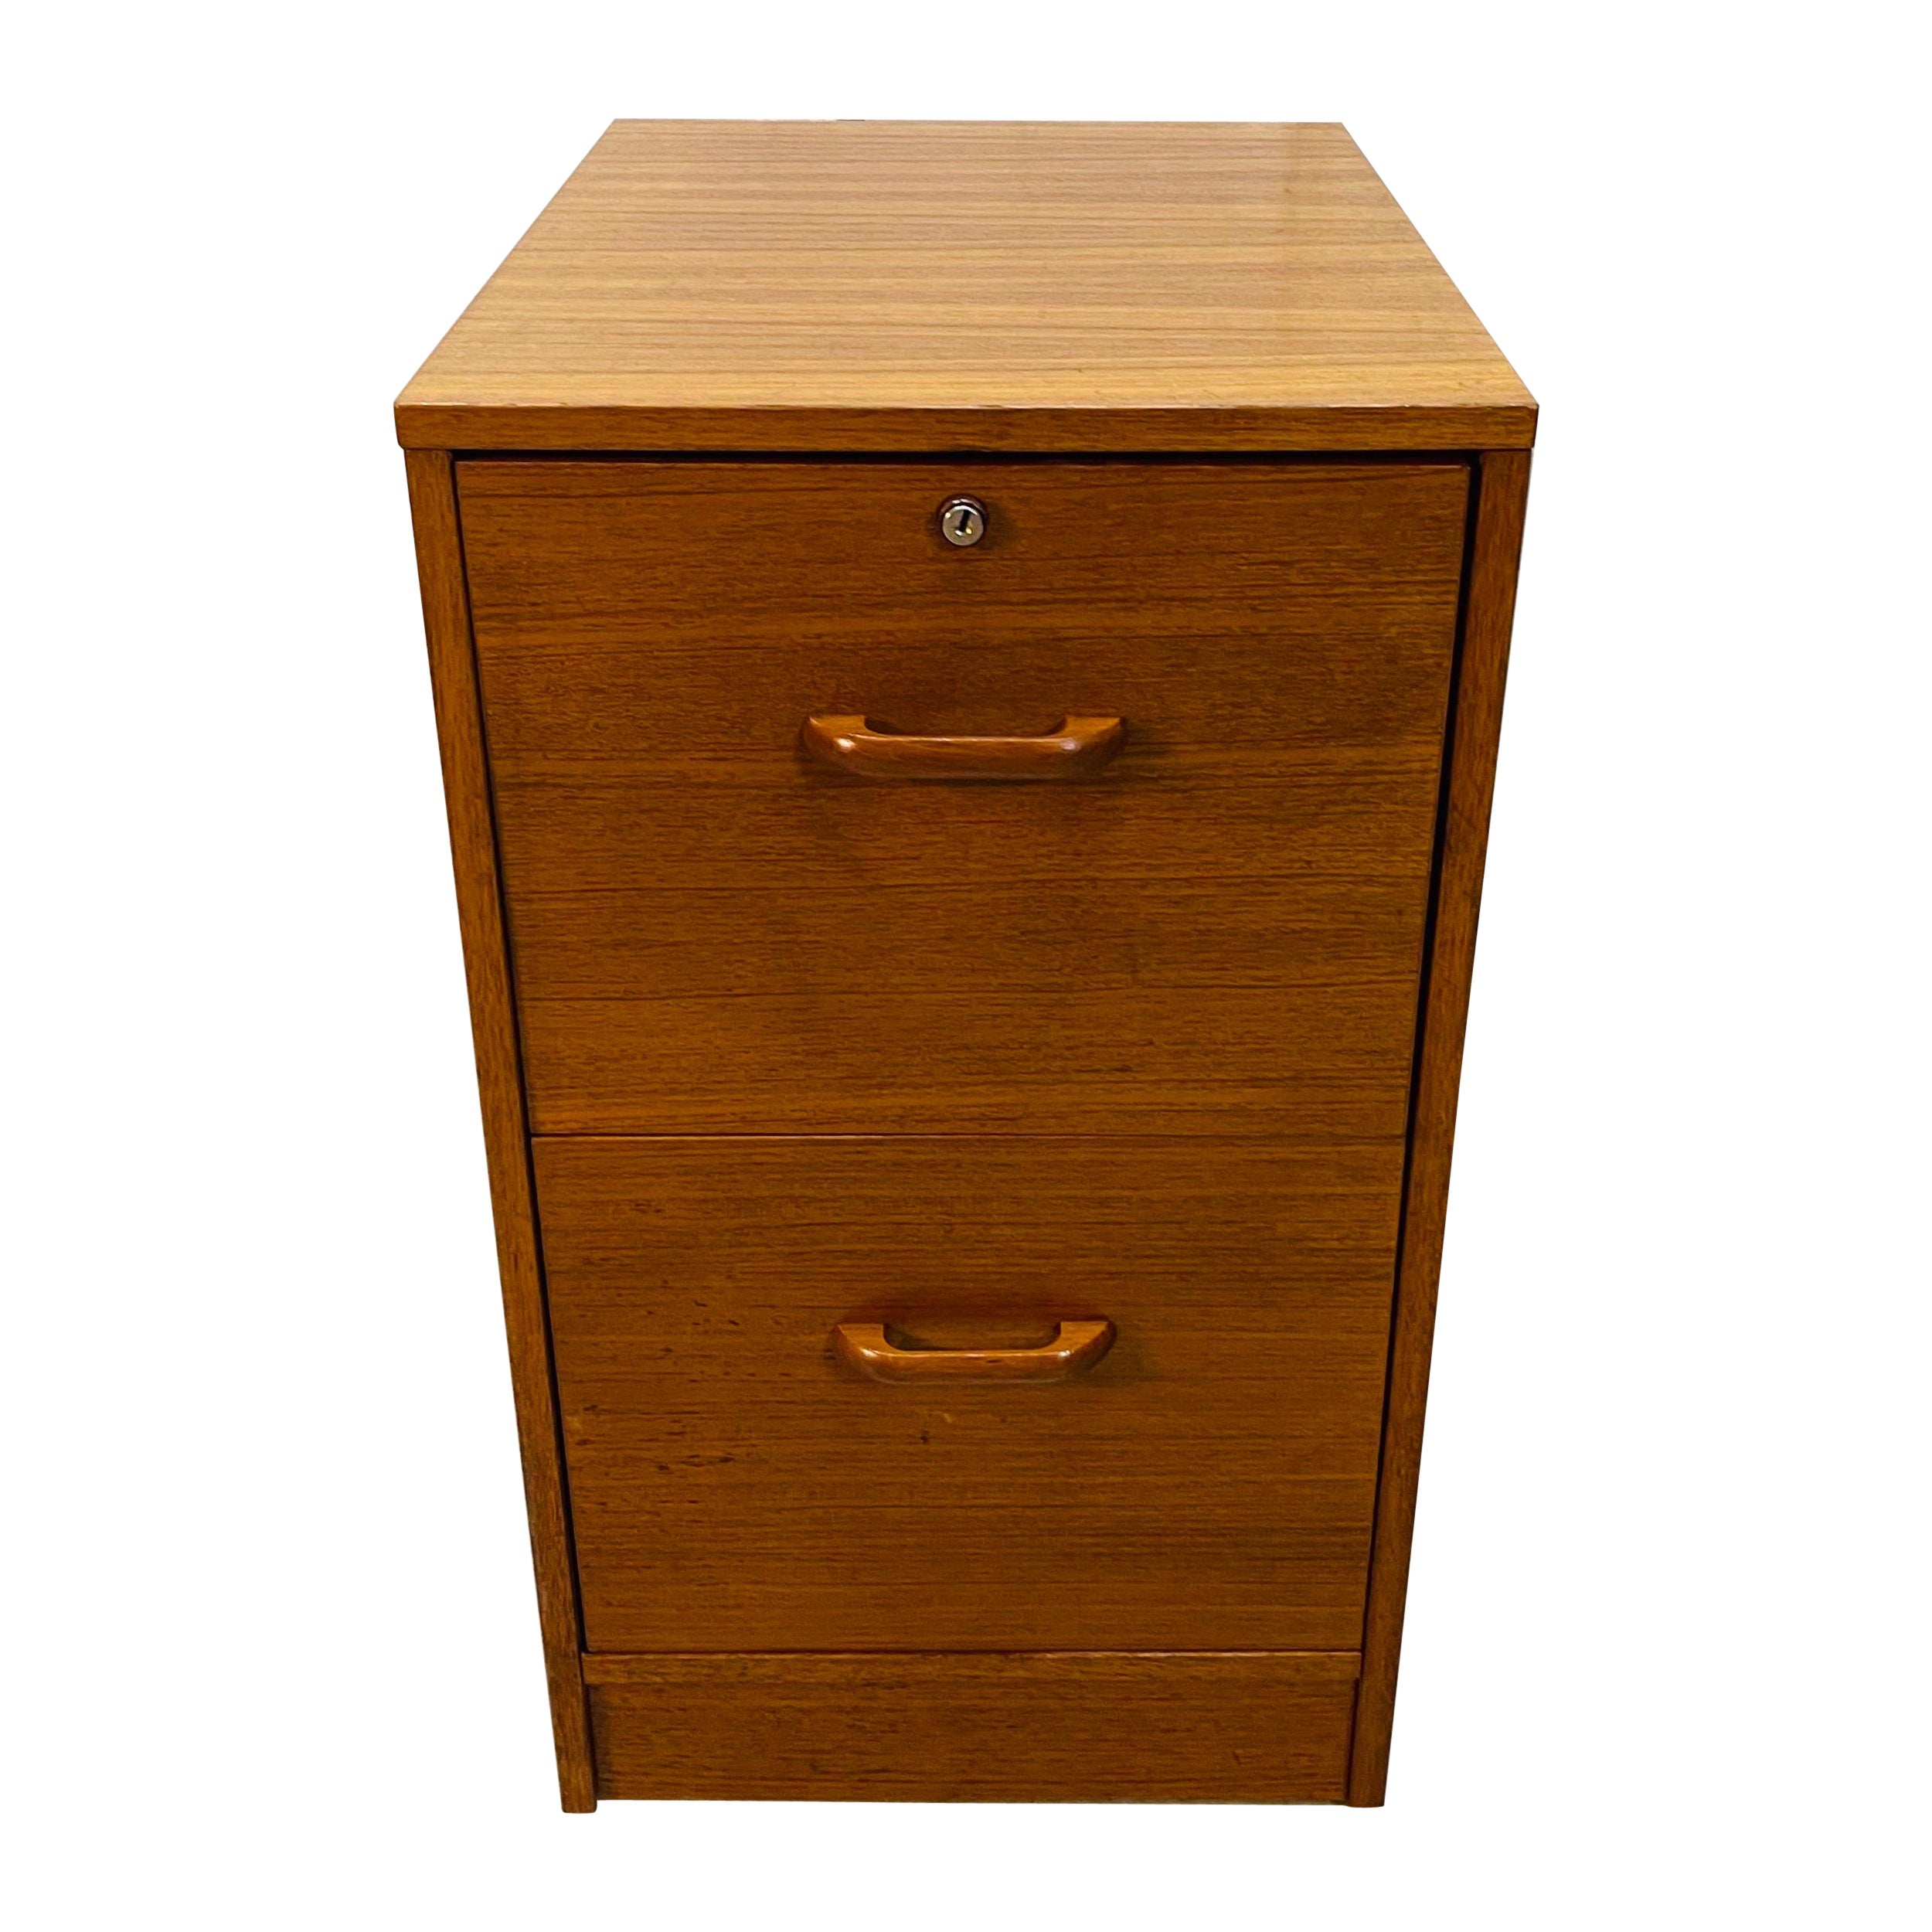 1970s Teak Wood Two Drawer File Cabinet